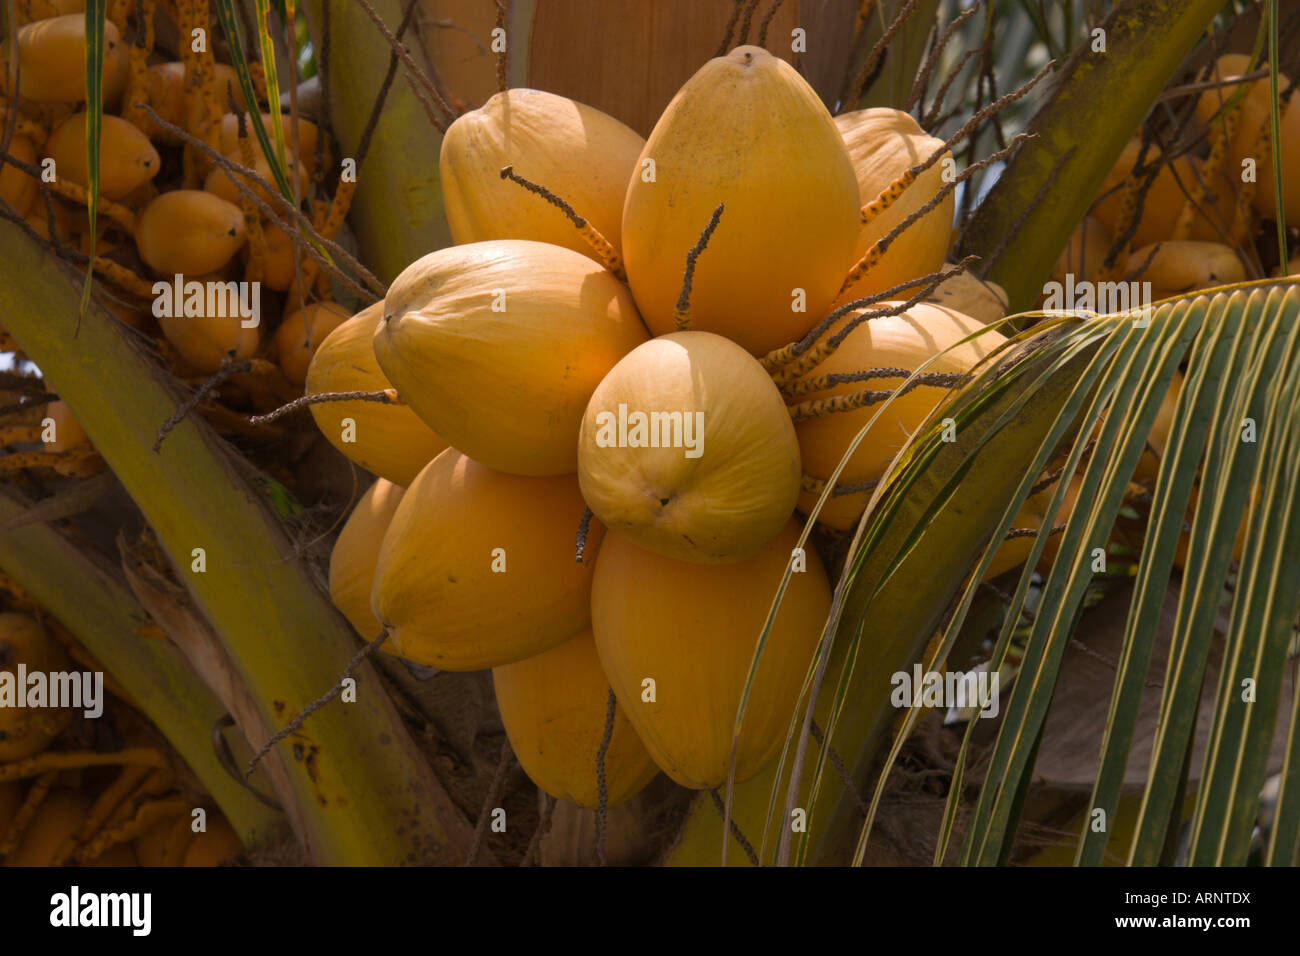 yellow coconuts Stock Photo